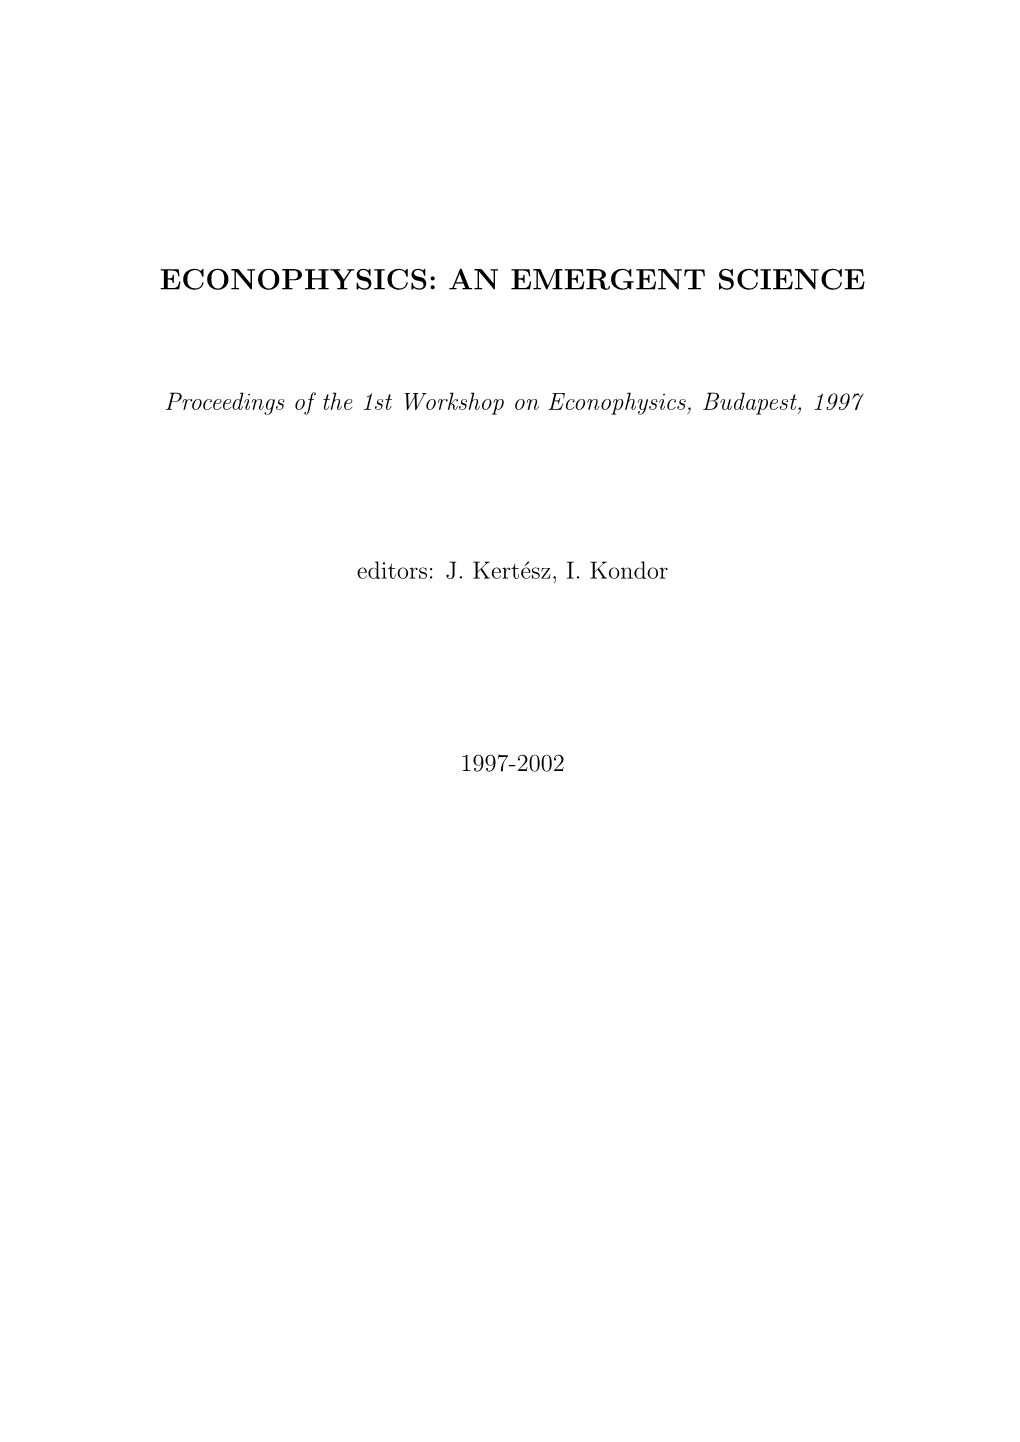 Econophysics: an Emergent Science